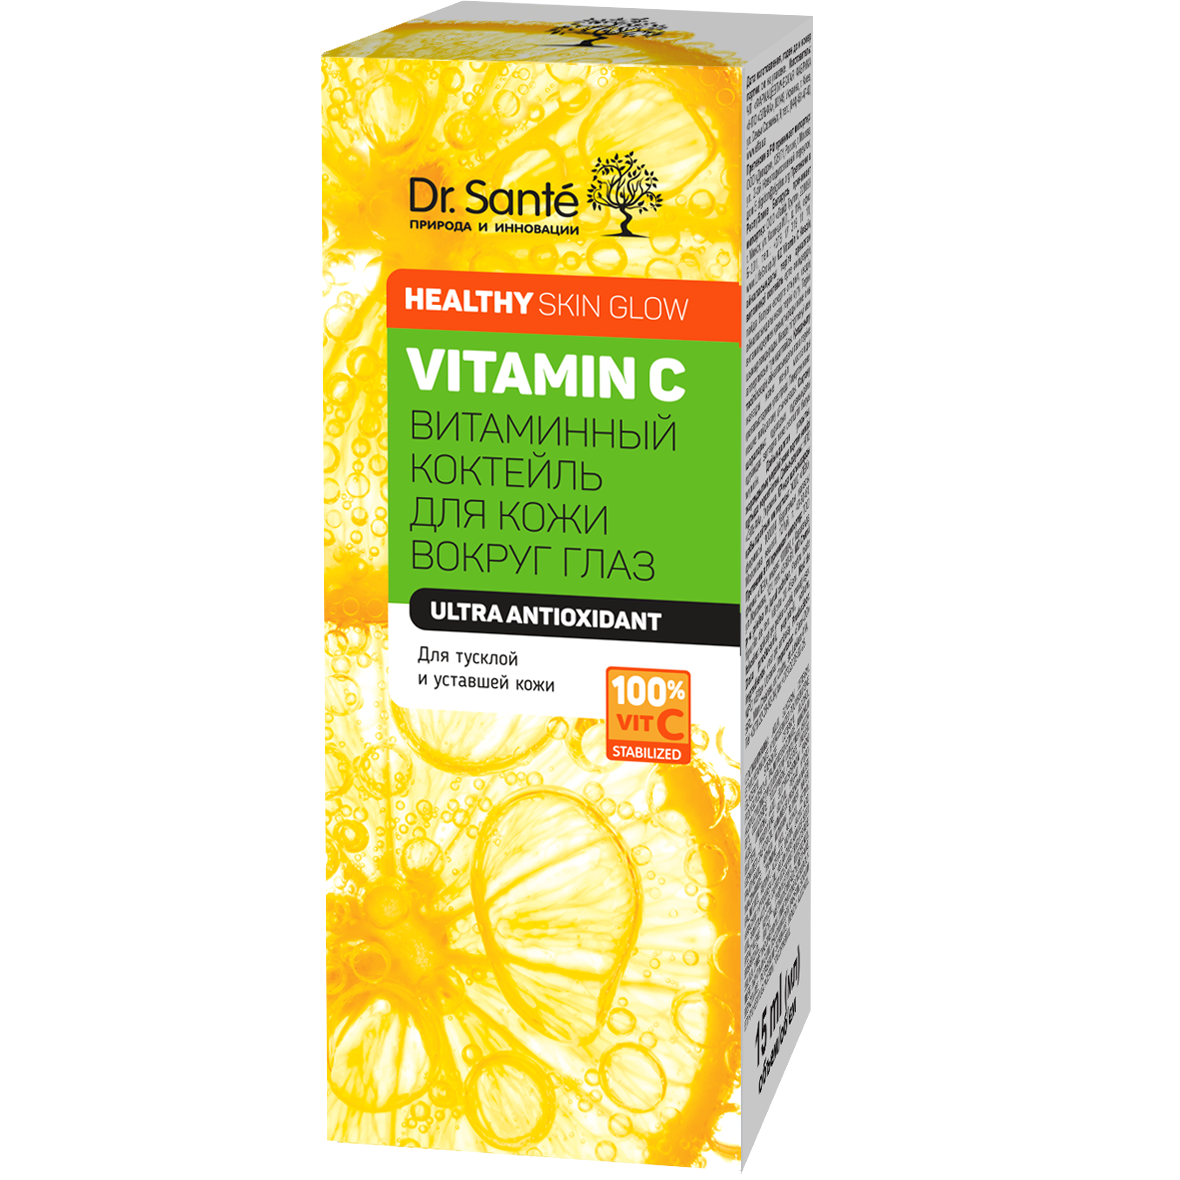 Витаминный коктейль для кожи вокруг глаз Dr. Sante Vitamin C, 15 мл - фото 1